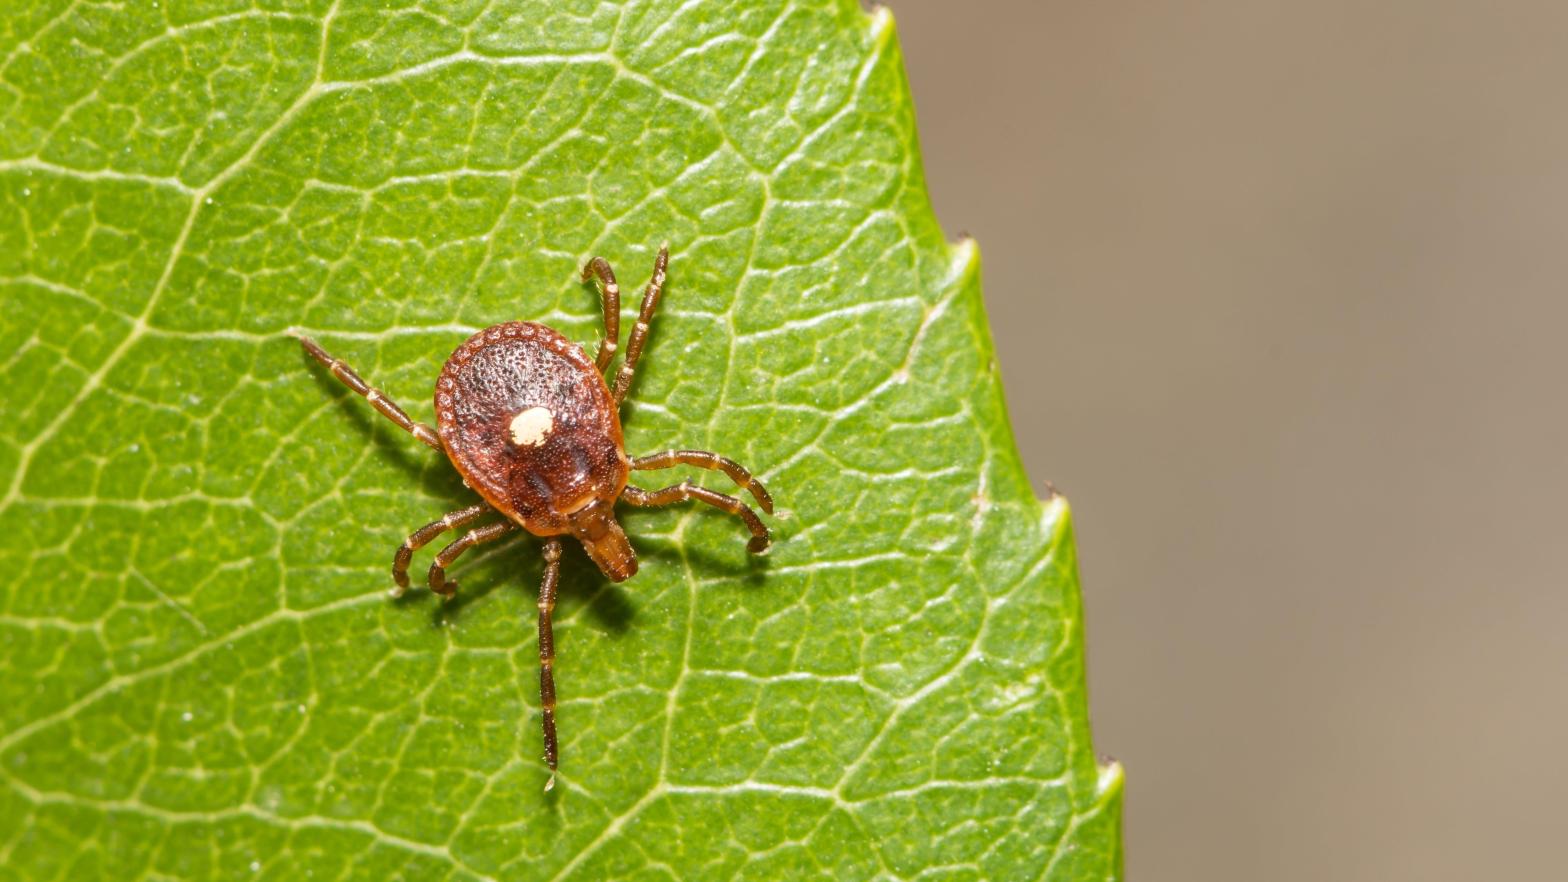 A female lone star tick (Amblyomma americanum).  (Image: Jay Ondreicka, Shutterstock)